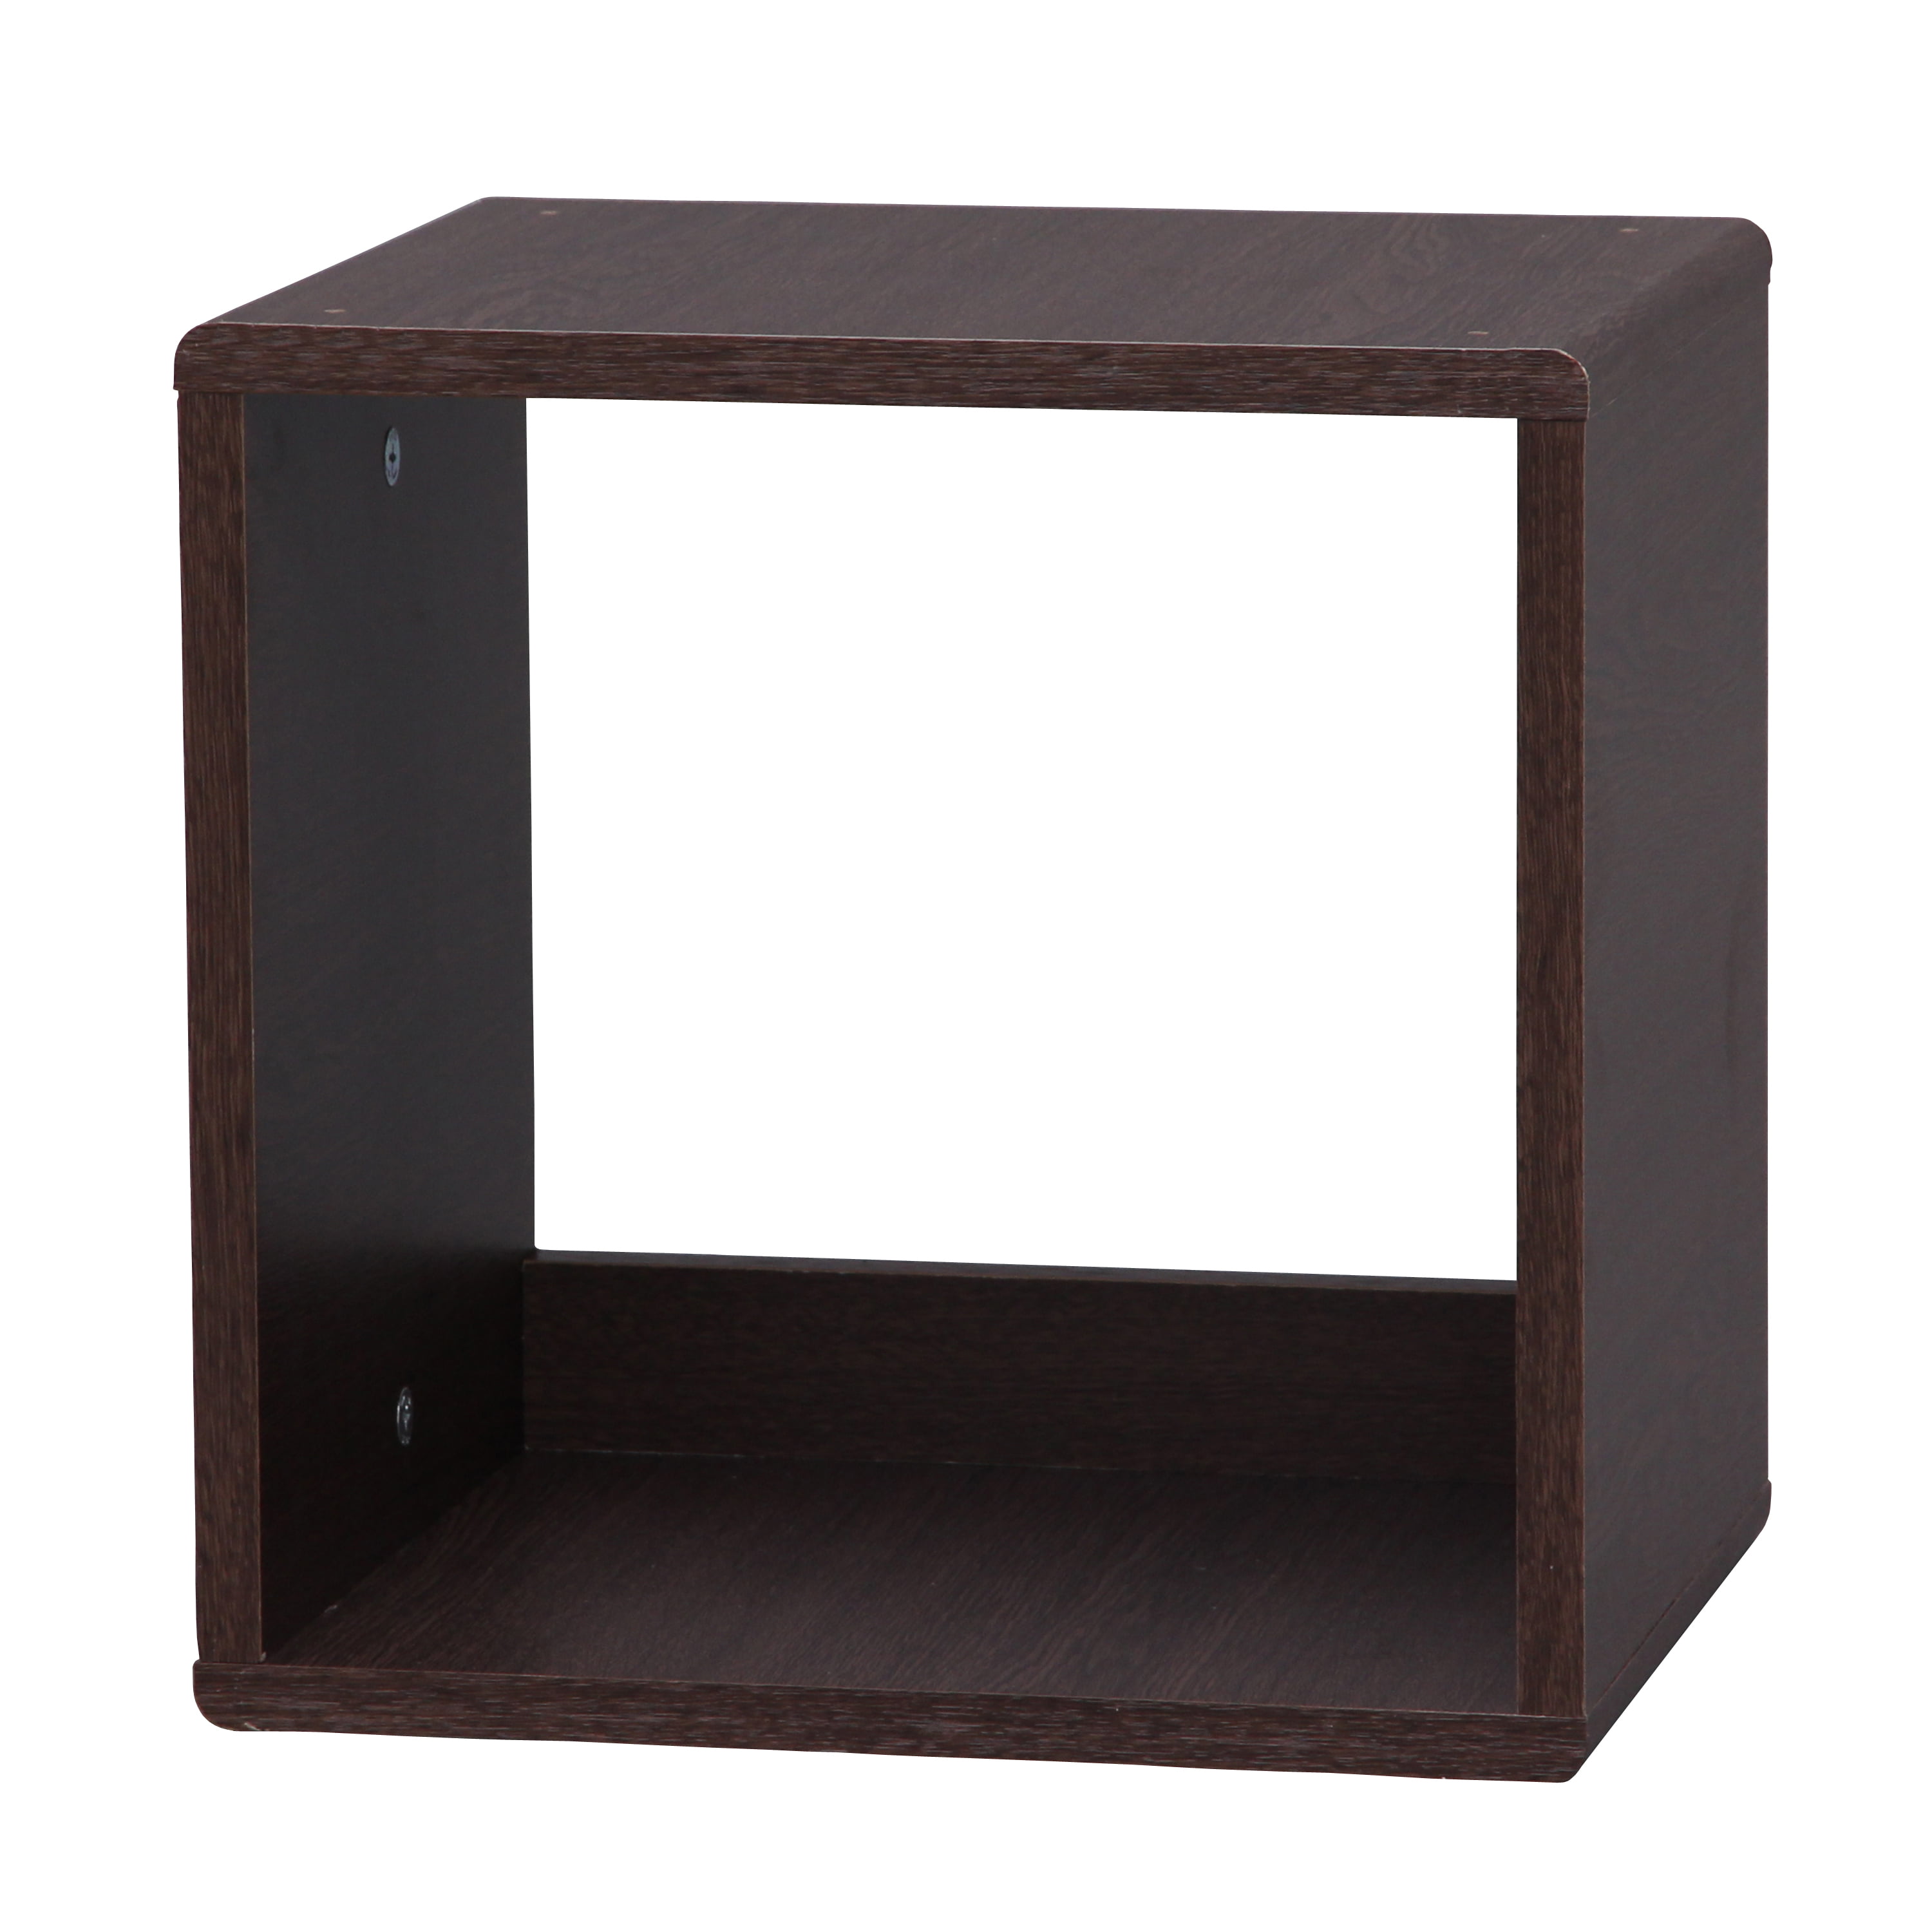 IRIS USA, 4-Sided Wooden Open Storage Cube, Brown Oak